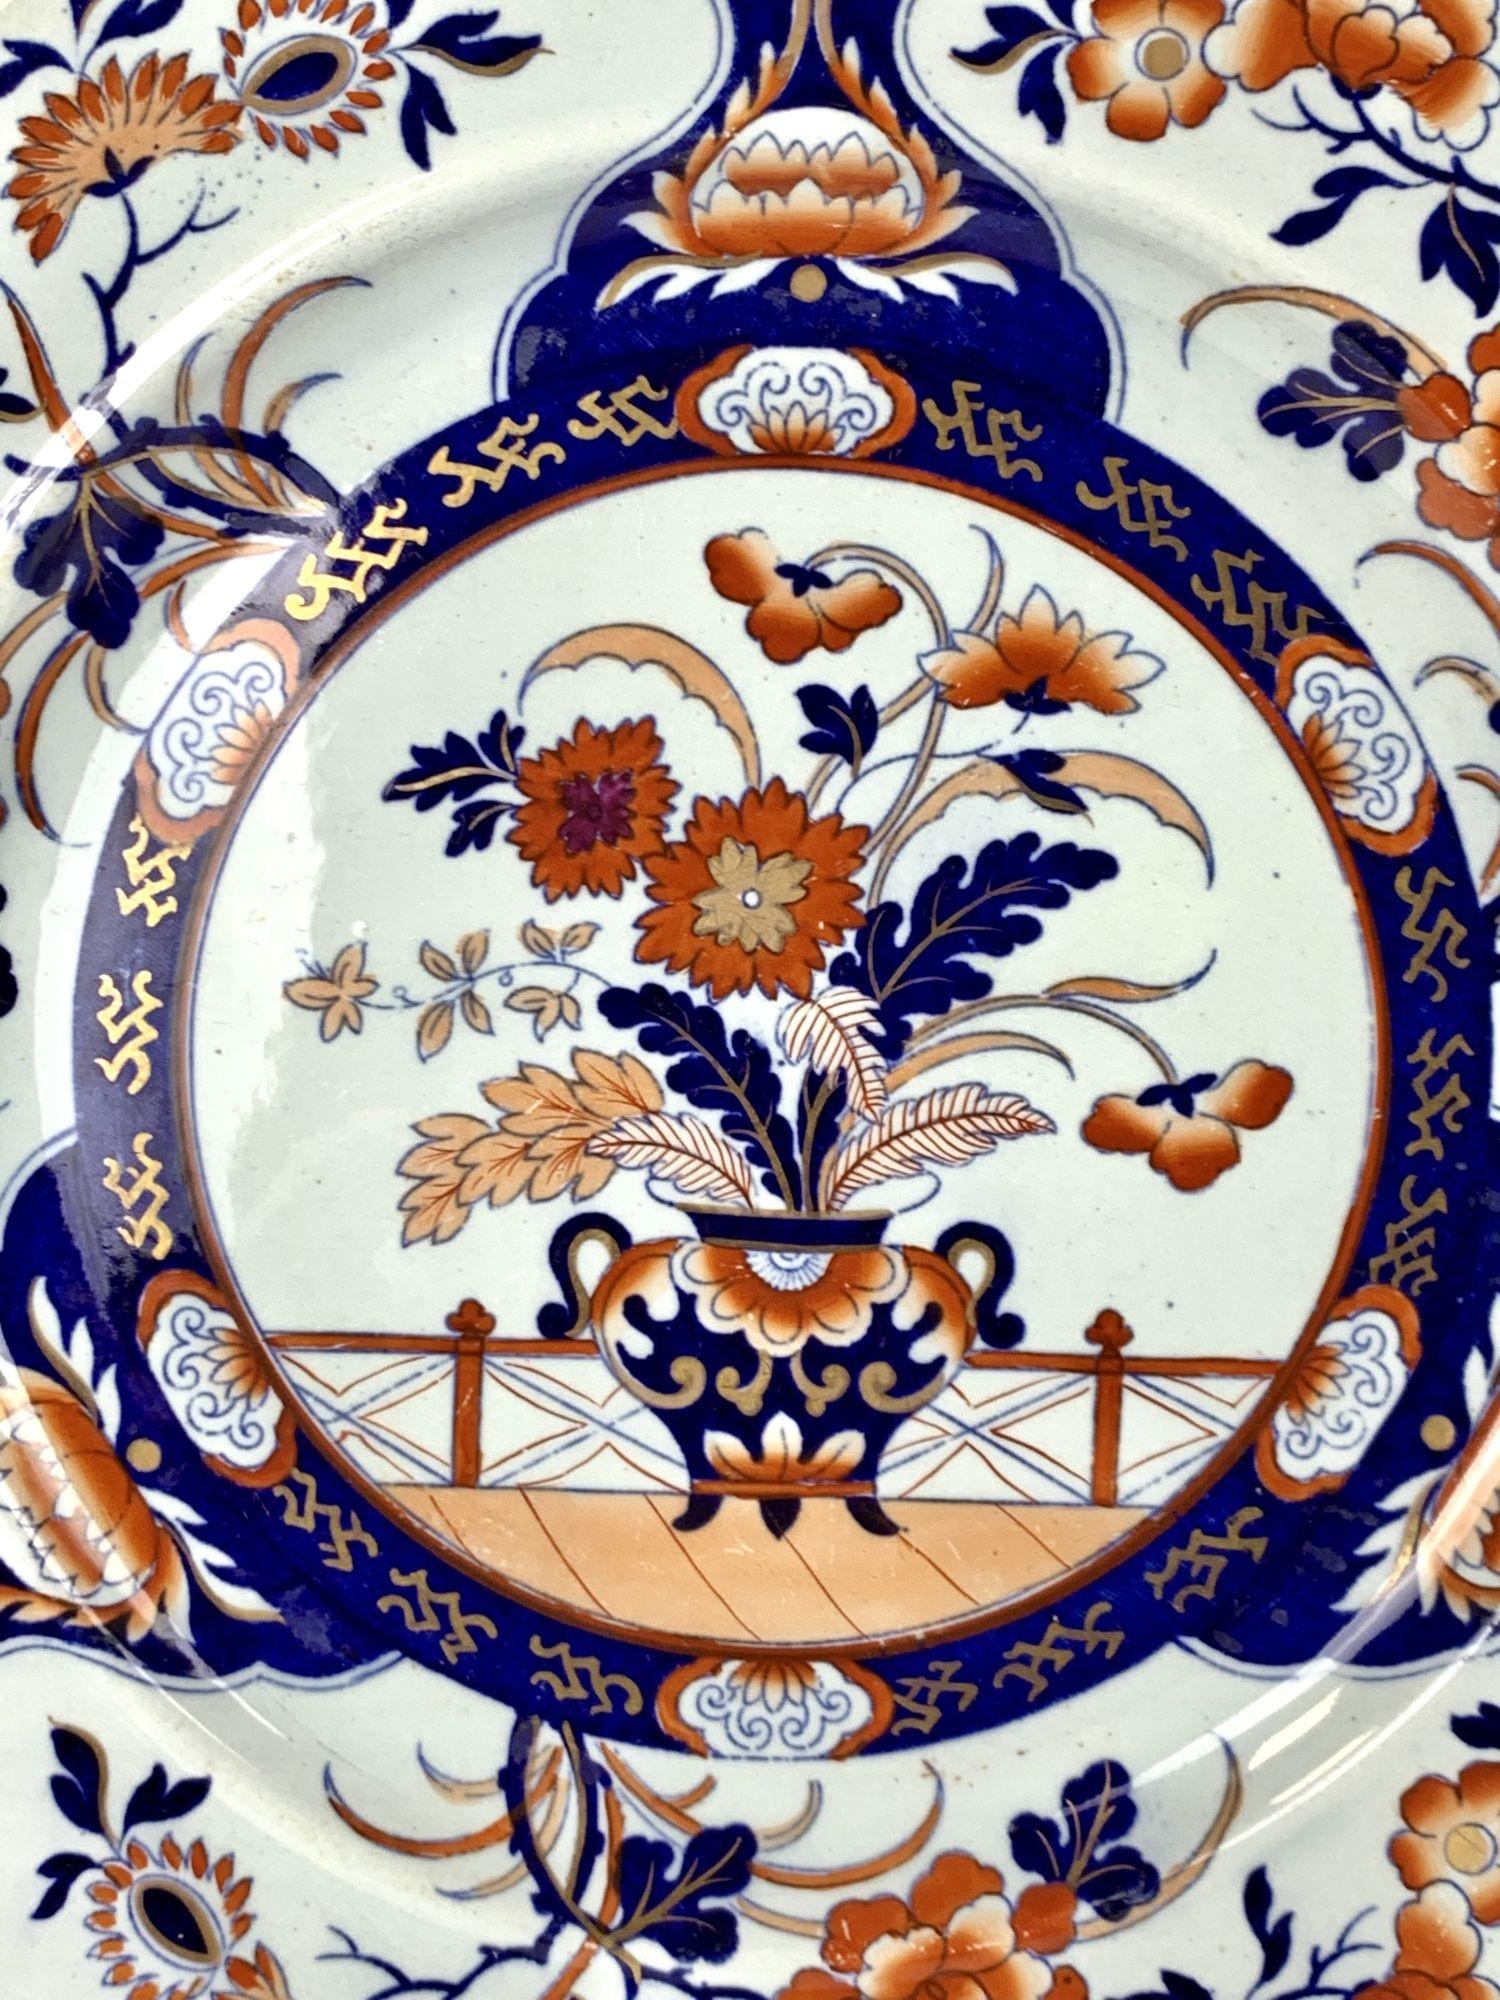 christineholm porcelain history